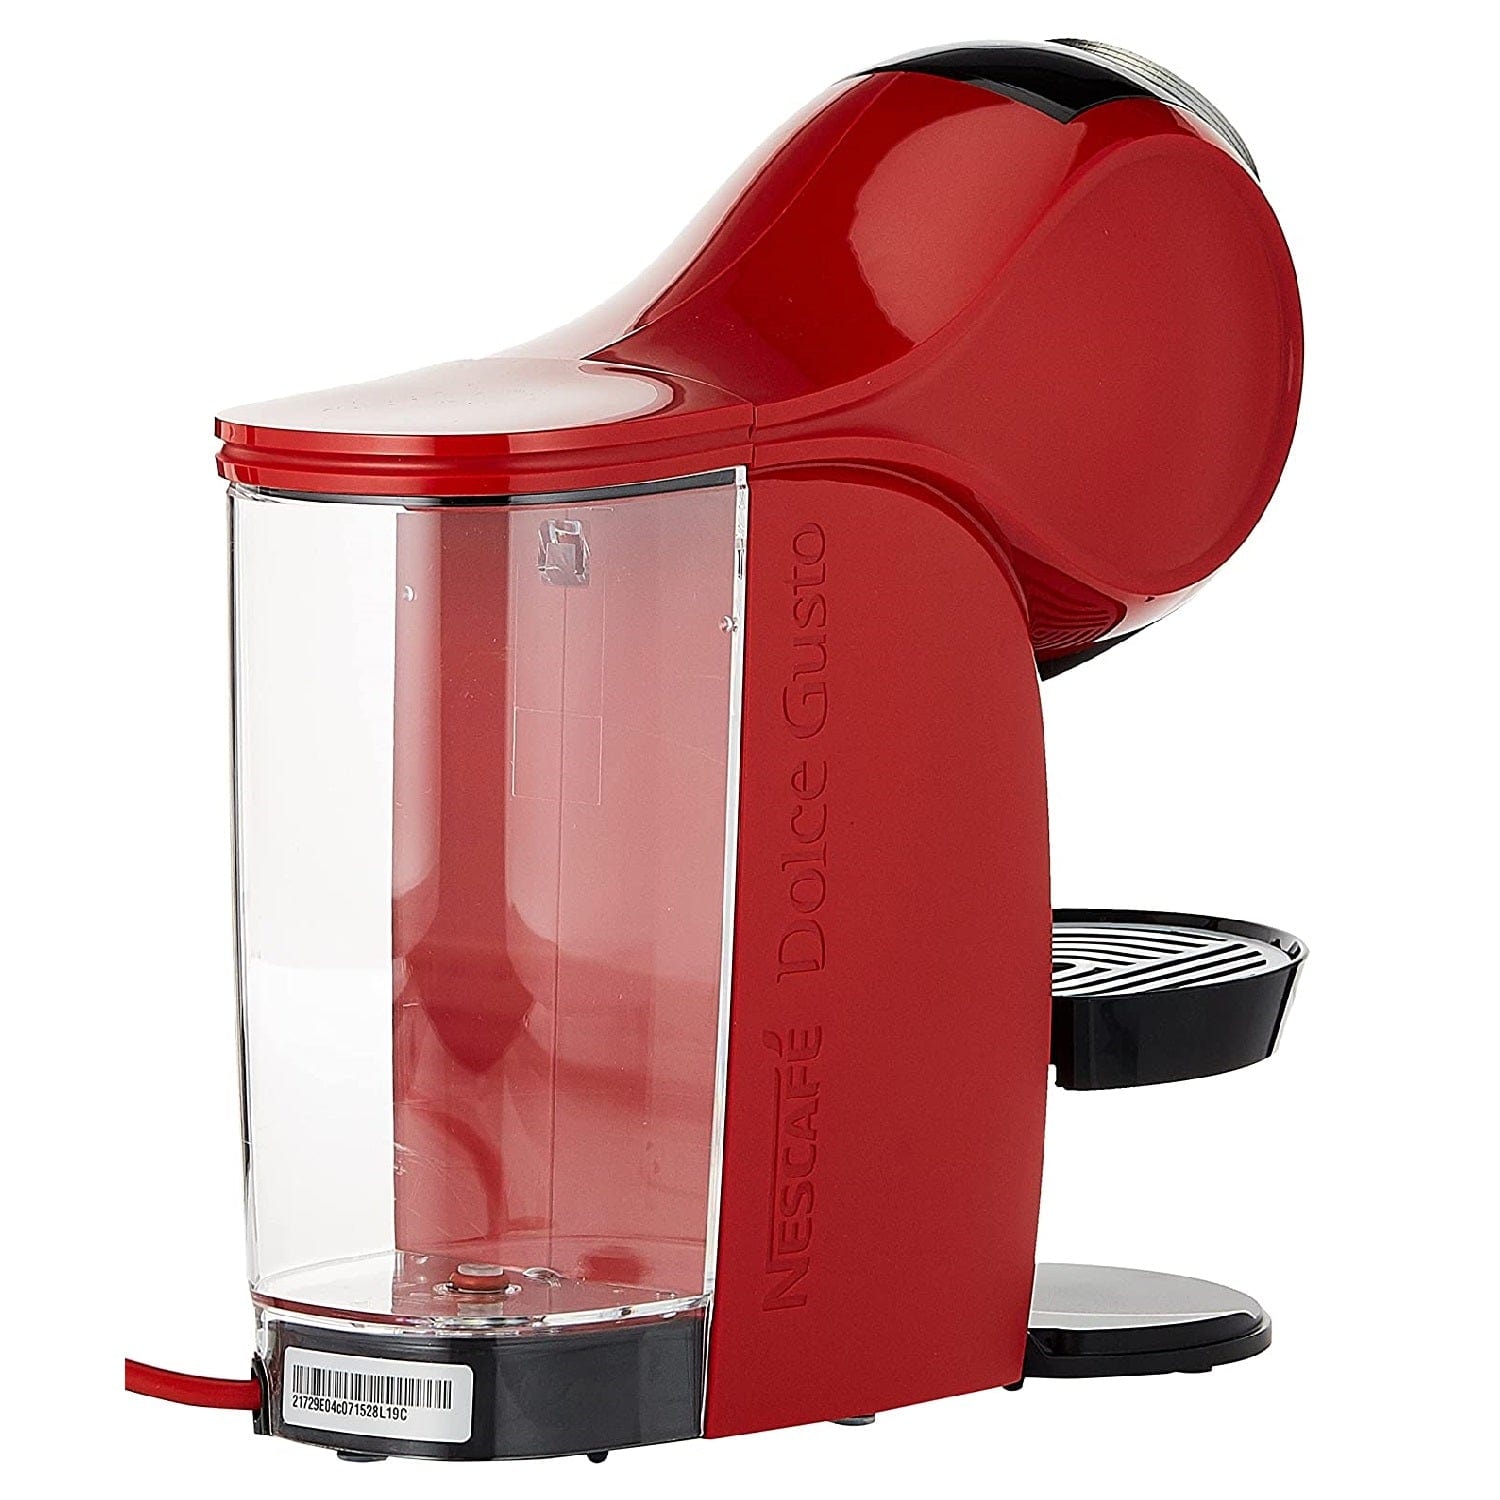 Dolce Gusto Genio S Plus Coffee Machine Red EDG315.R